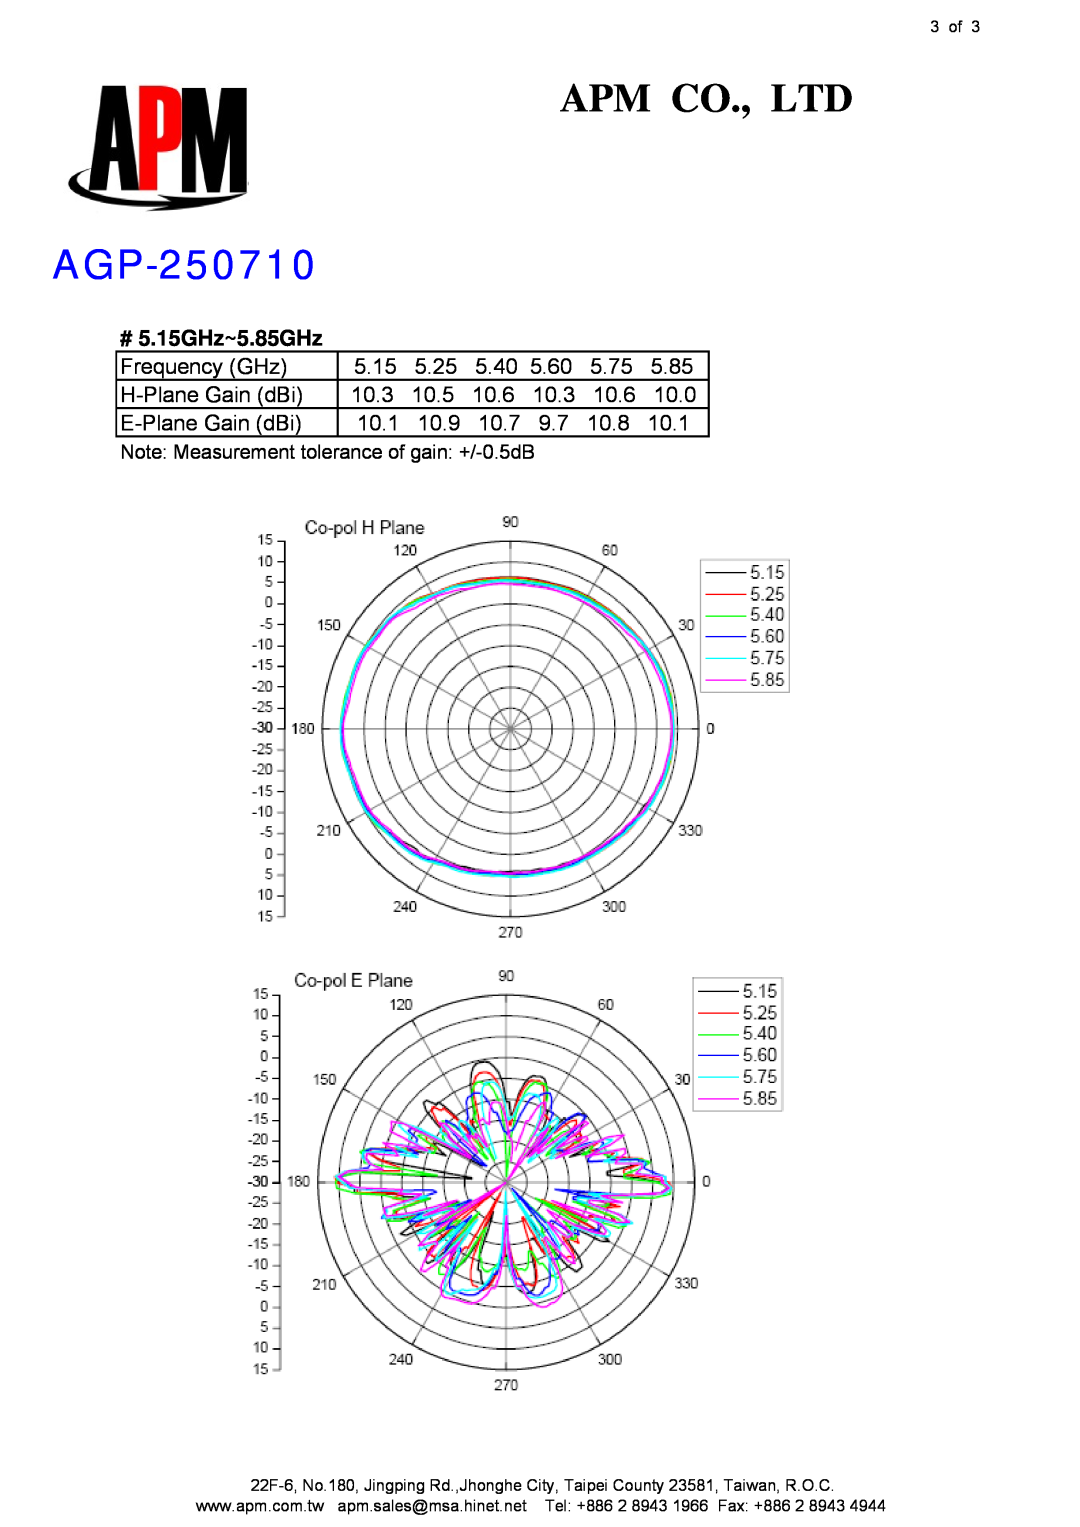 APM AGO-250710 manual # 5.15GHz~5.85GHz, AGP-250710, Note Measurement tolerance of gain +/-0.5dB, 3 of 